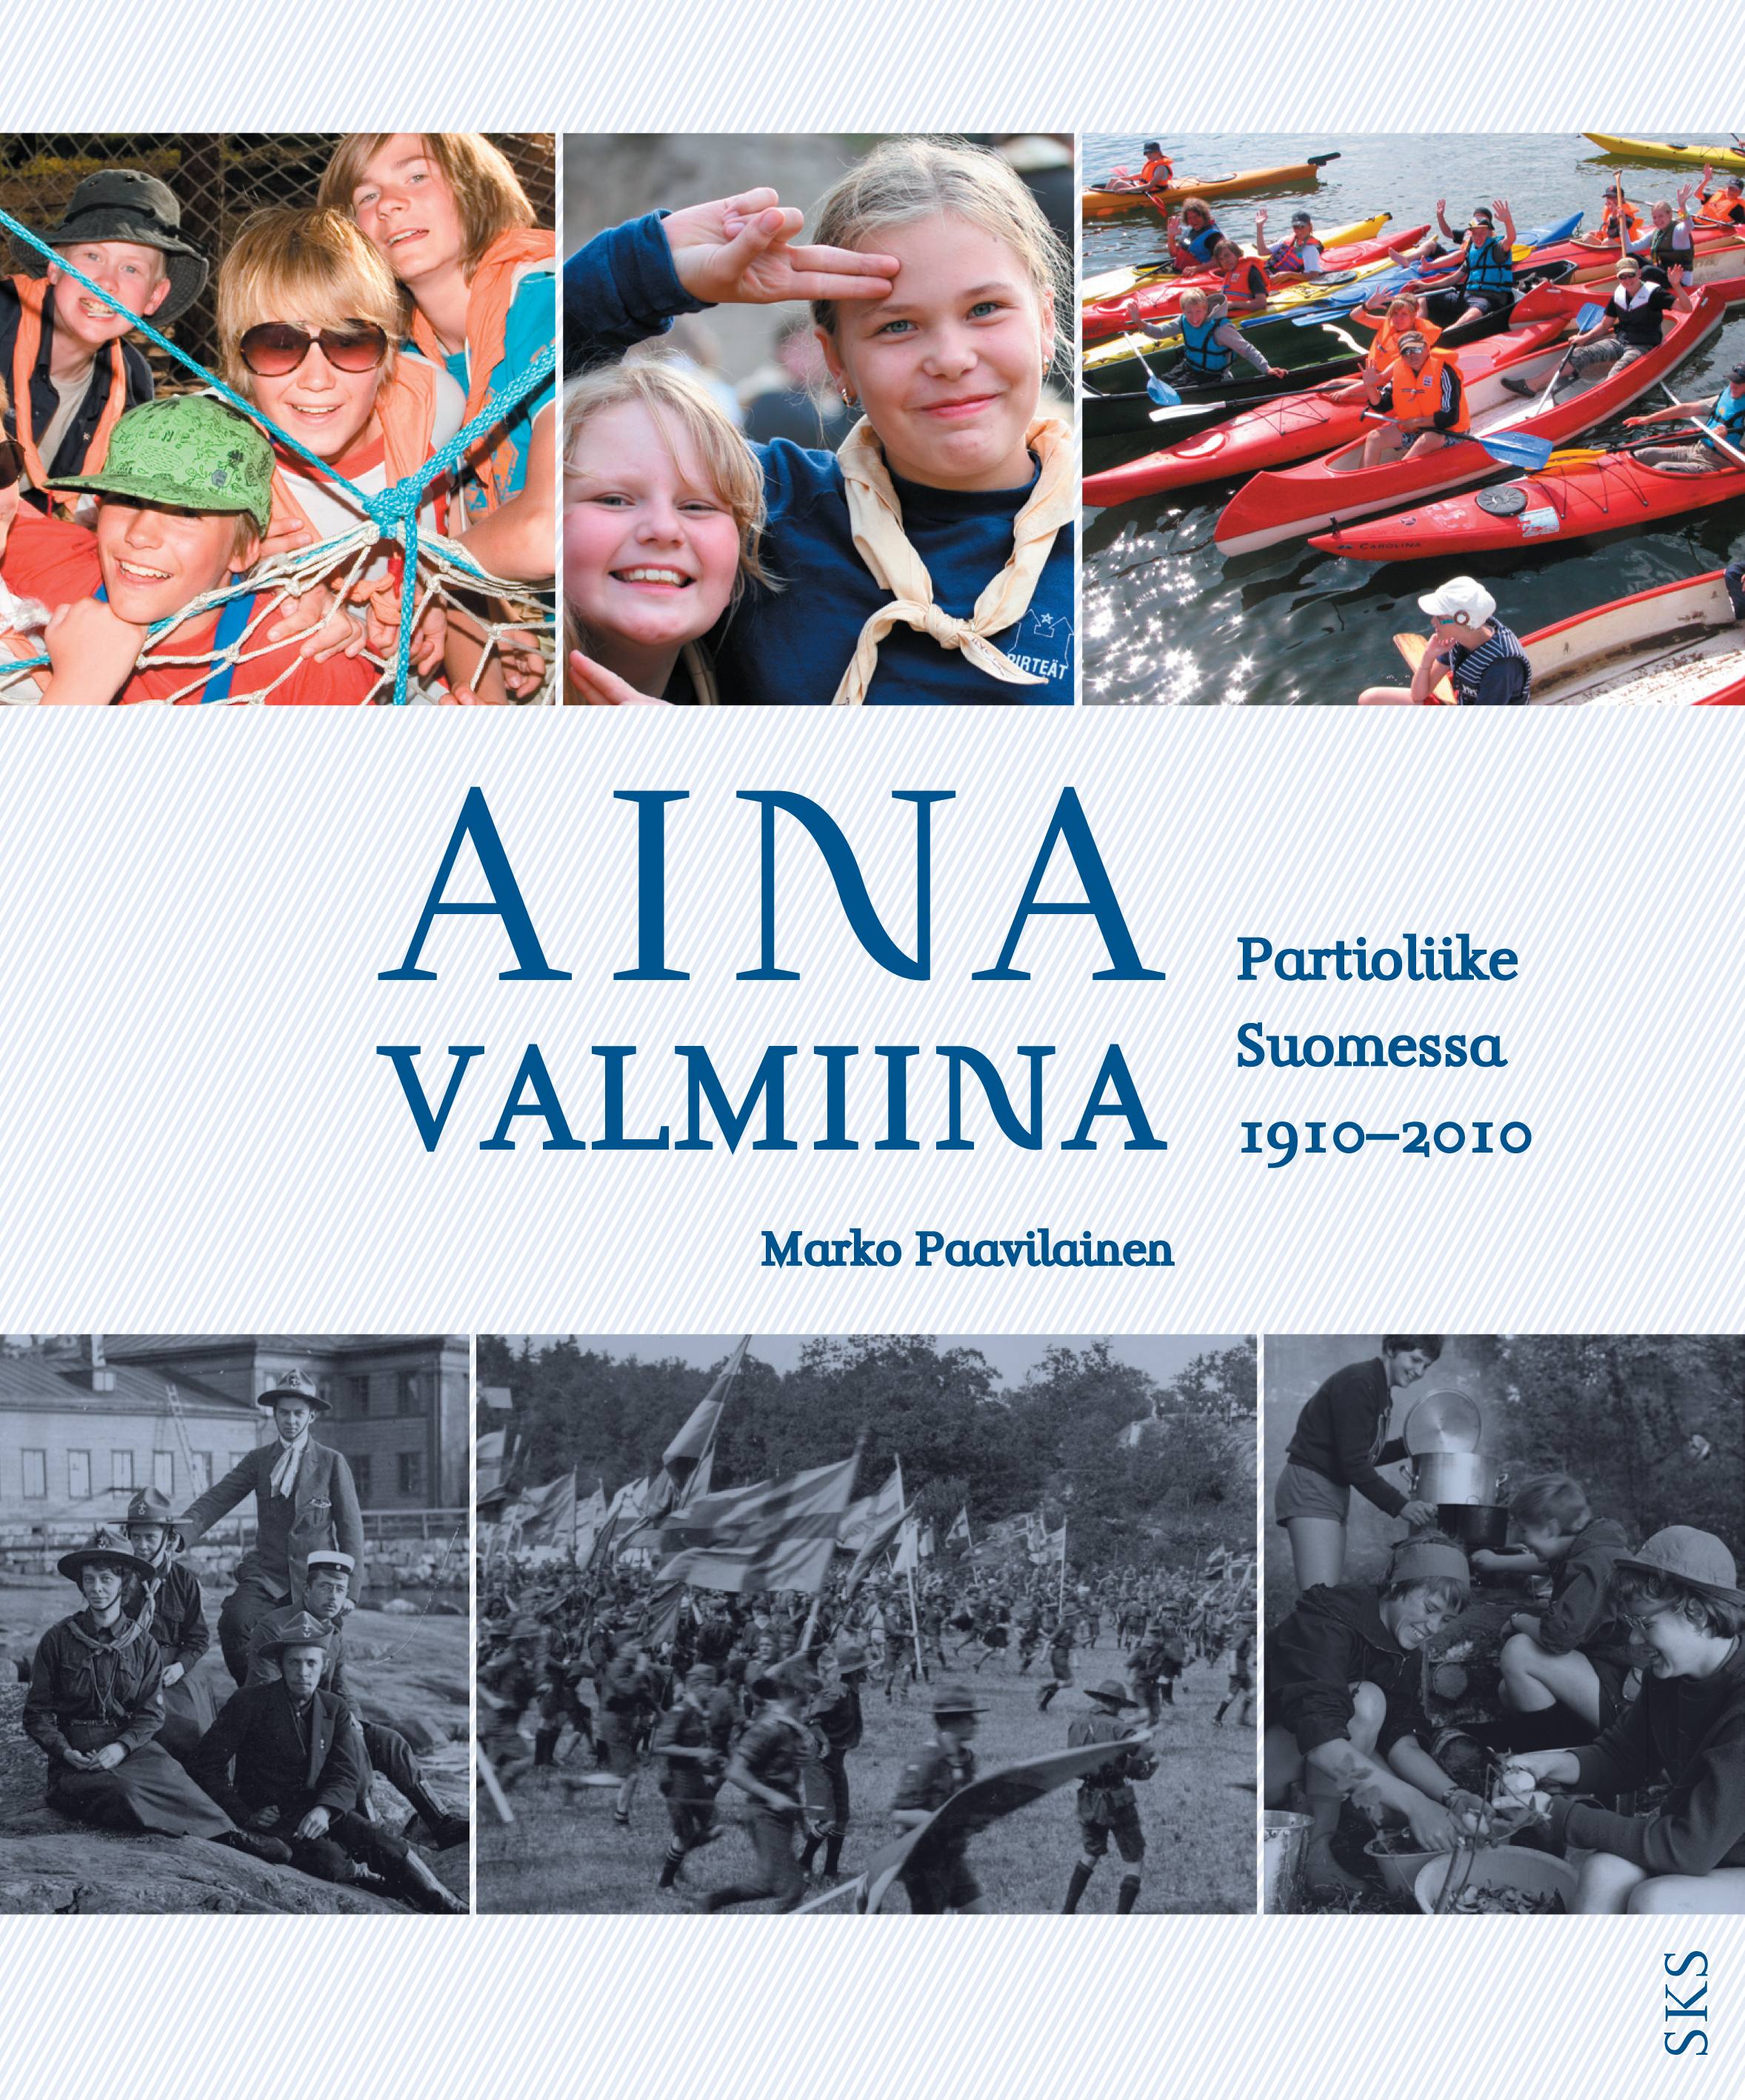 Aina Valmiina – Partioliike Suomessa 1910-2010